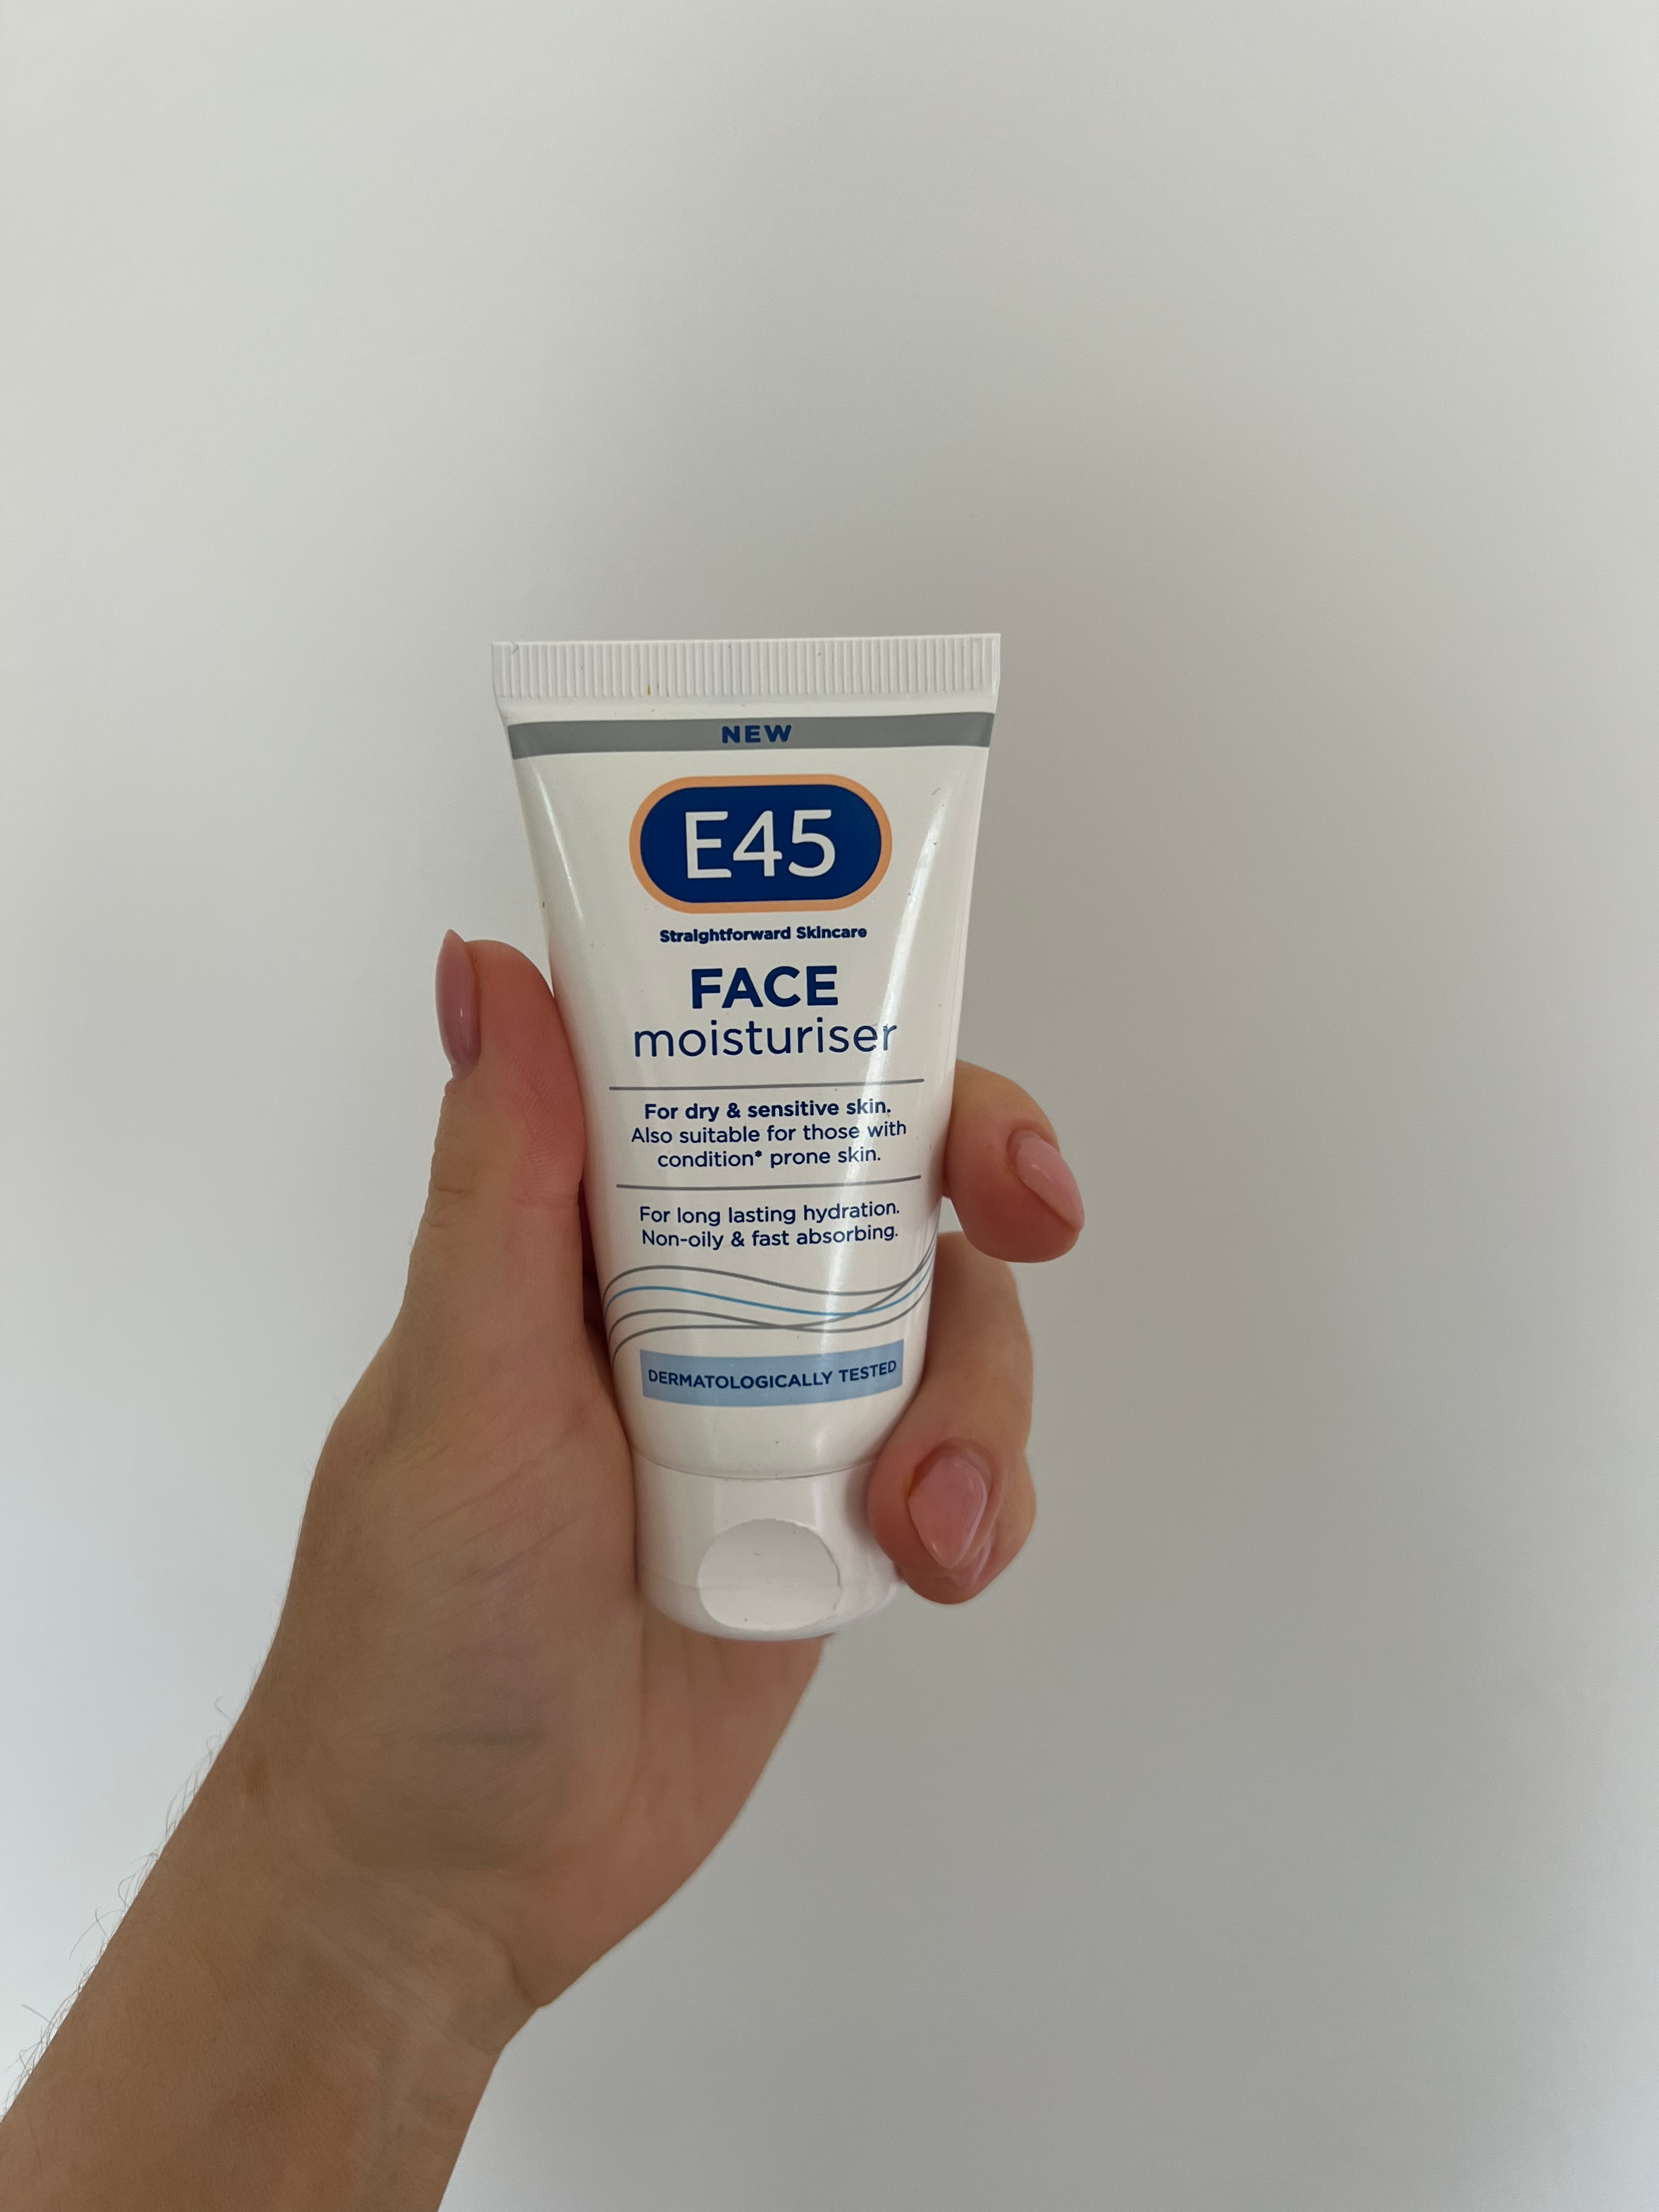 E45 face moisturiser review